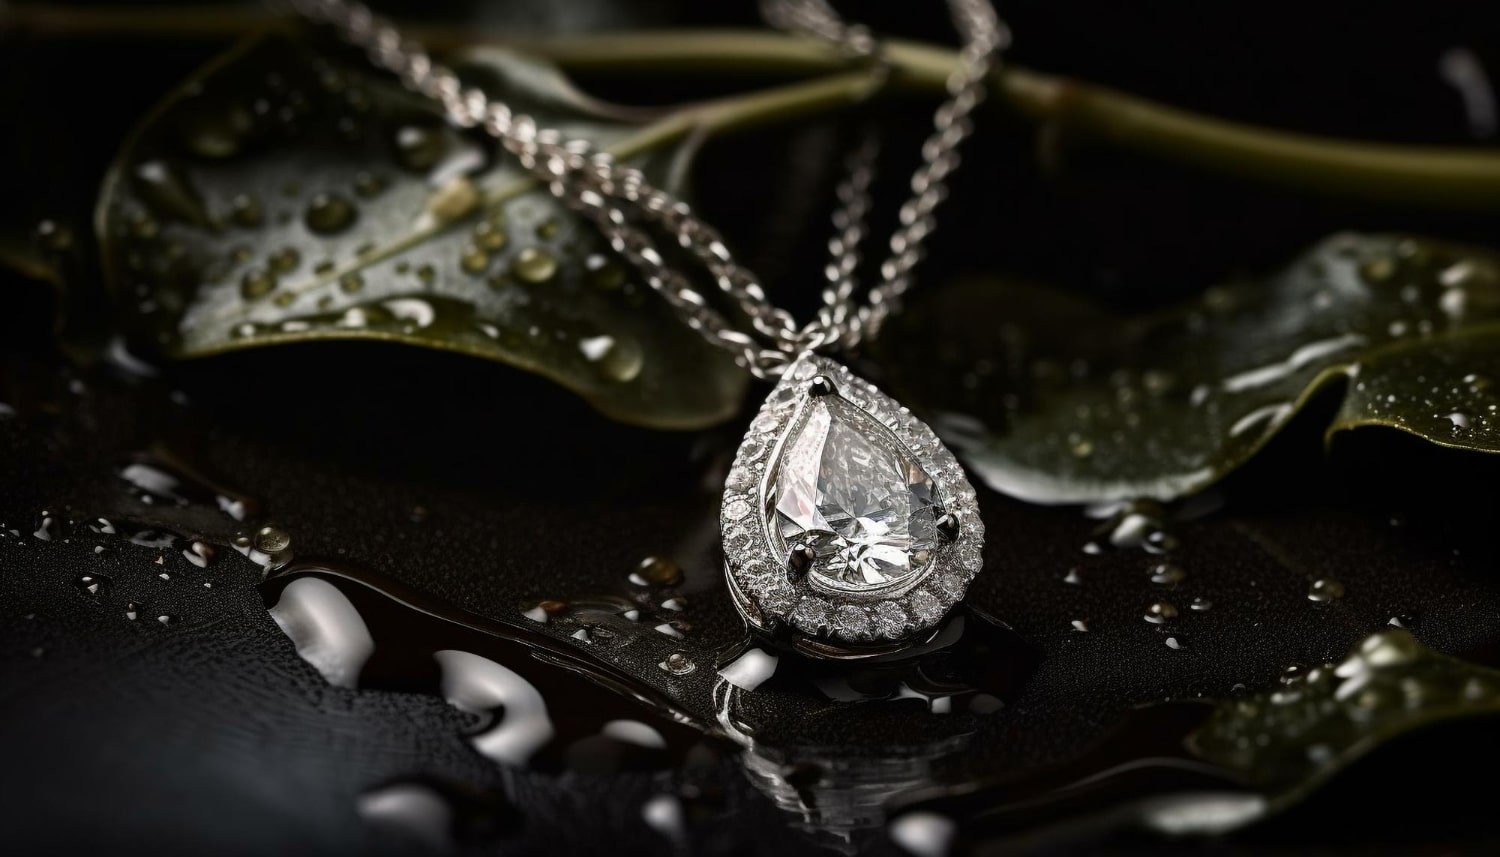 Swarovski Sparkling Crystal Jewelry and Decor